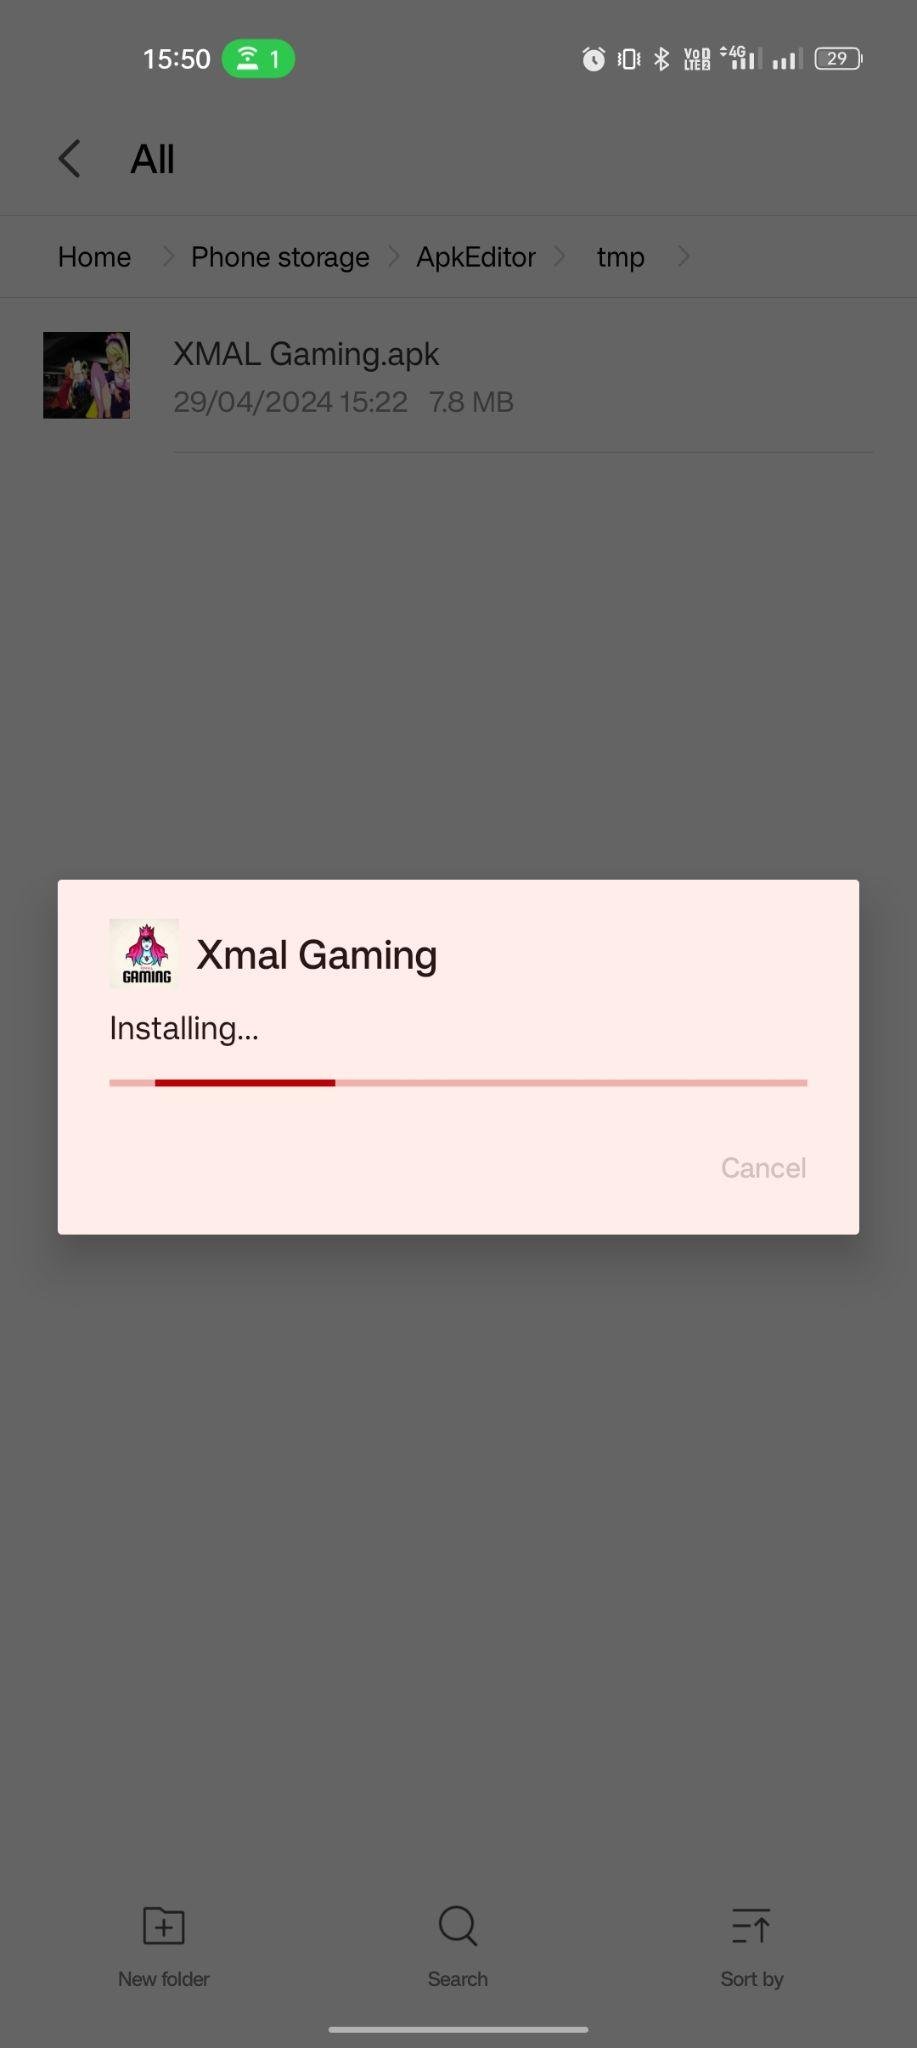 XMAL Gaming apk installing